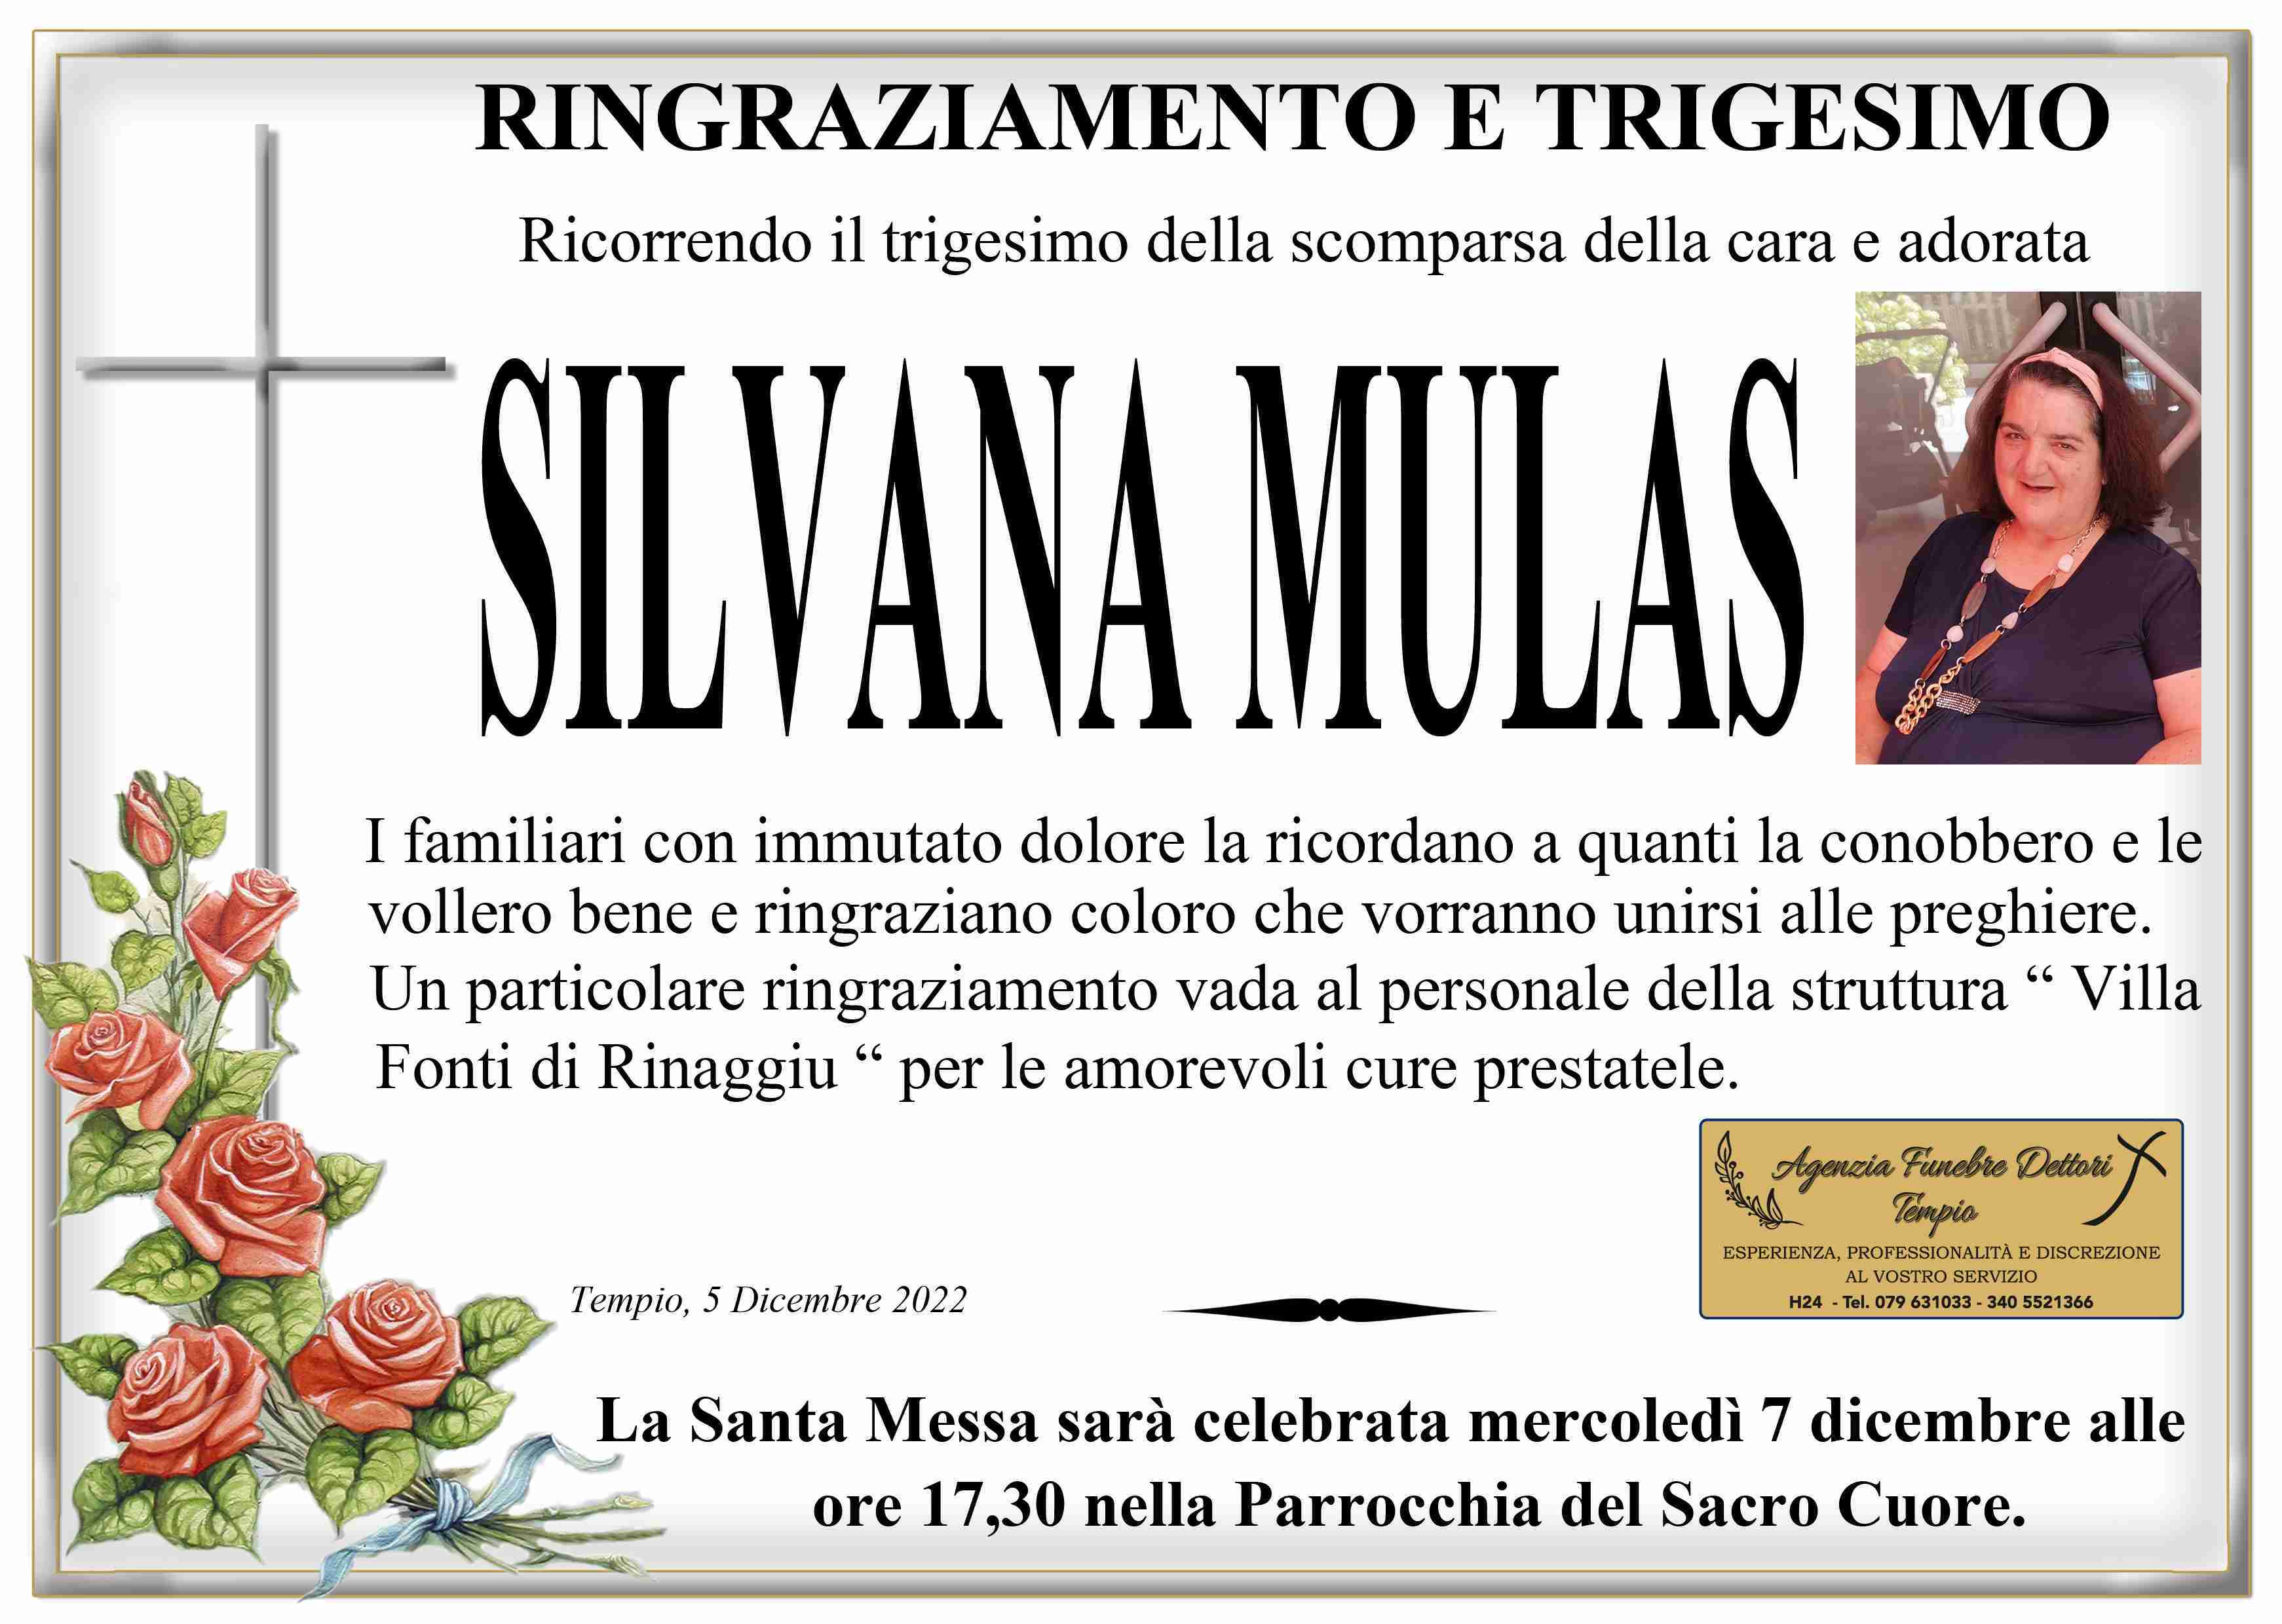 Silvana Mulas